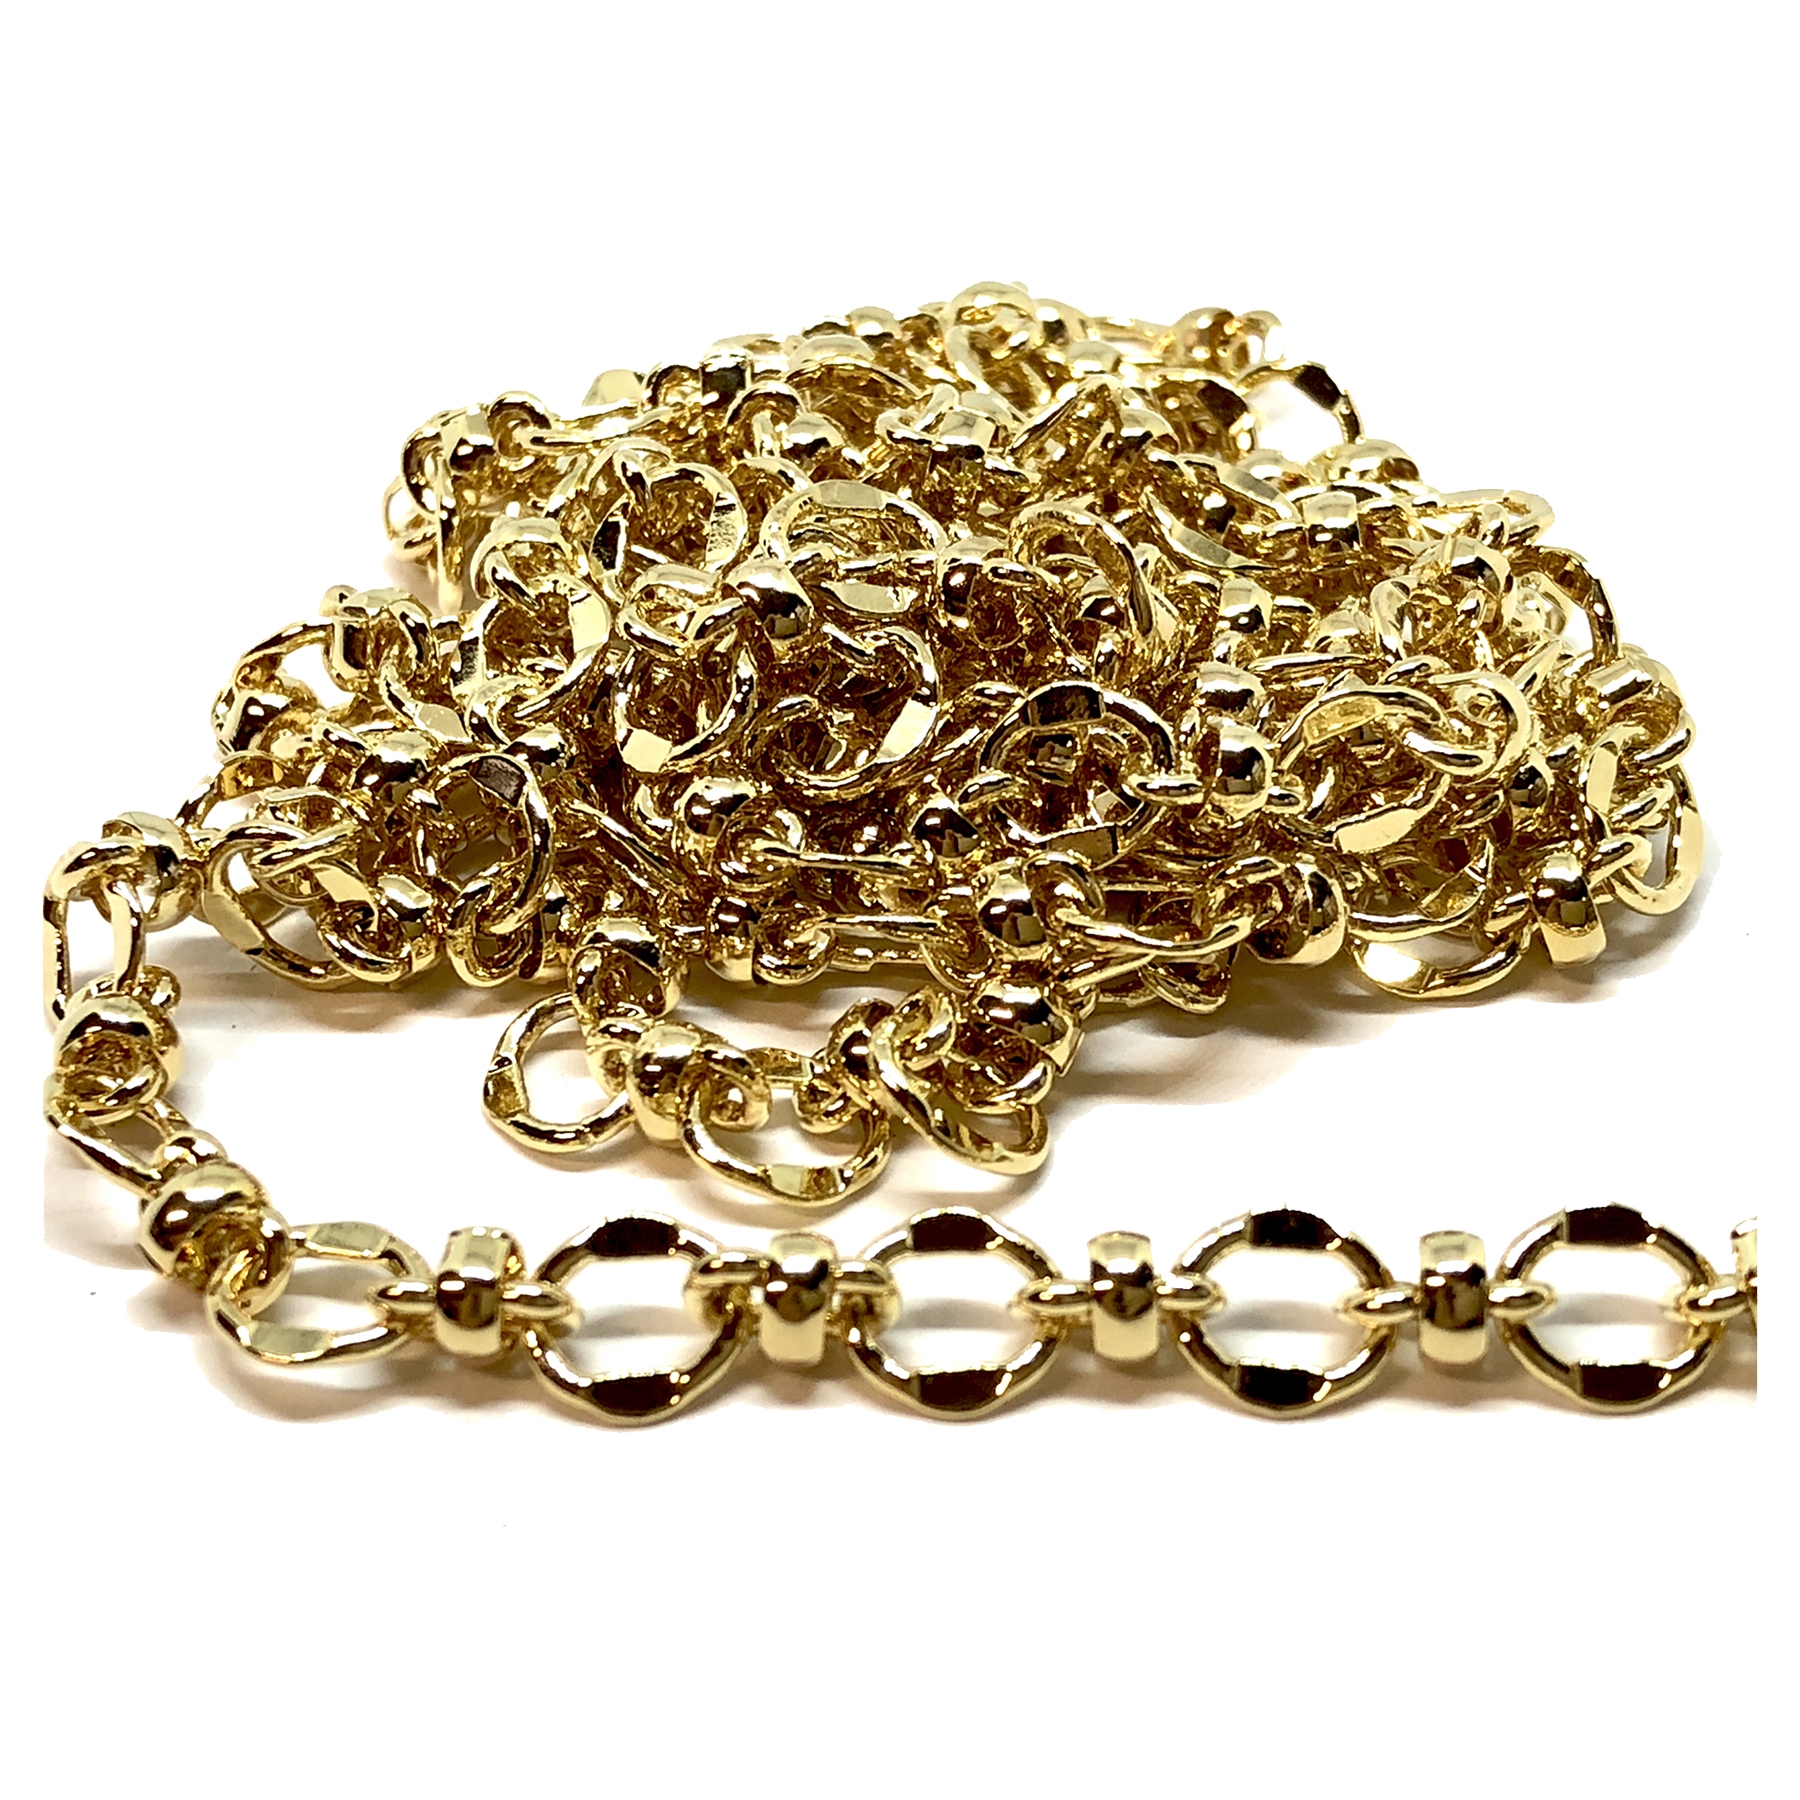 brass chain, gold plate chain, jewelry 